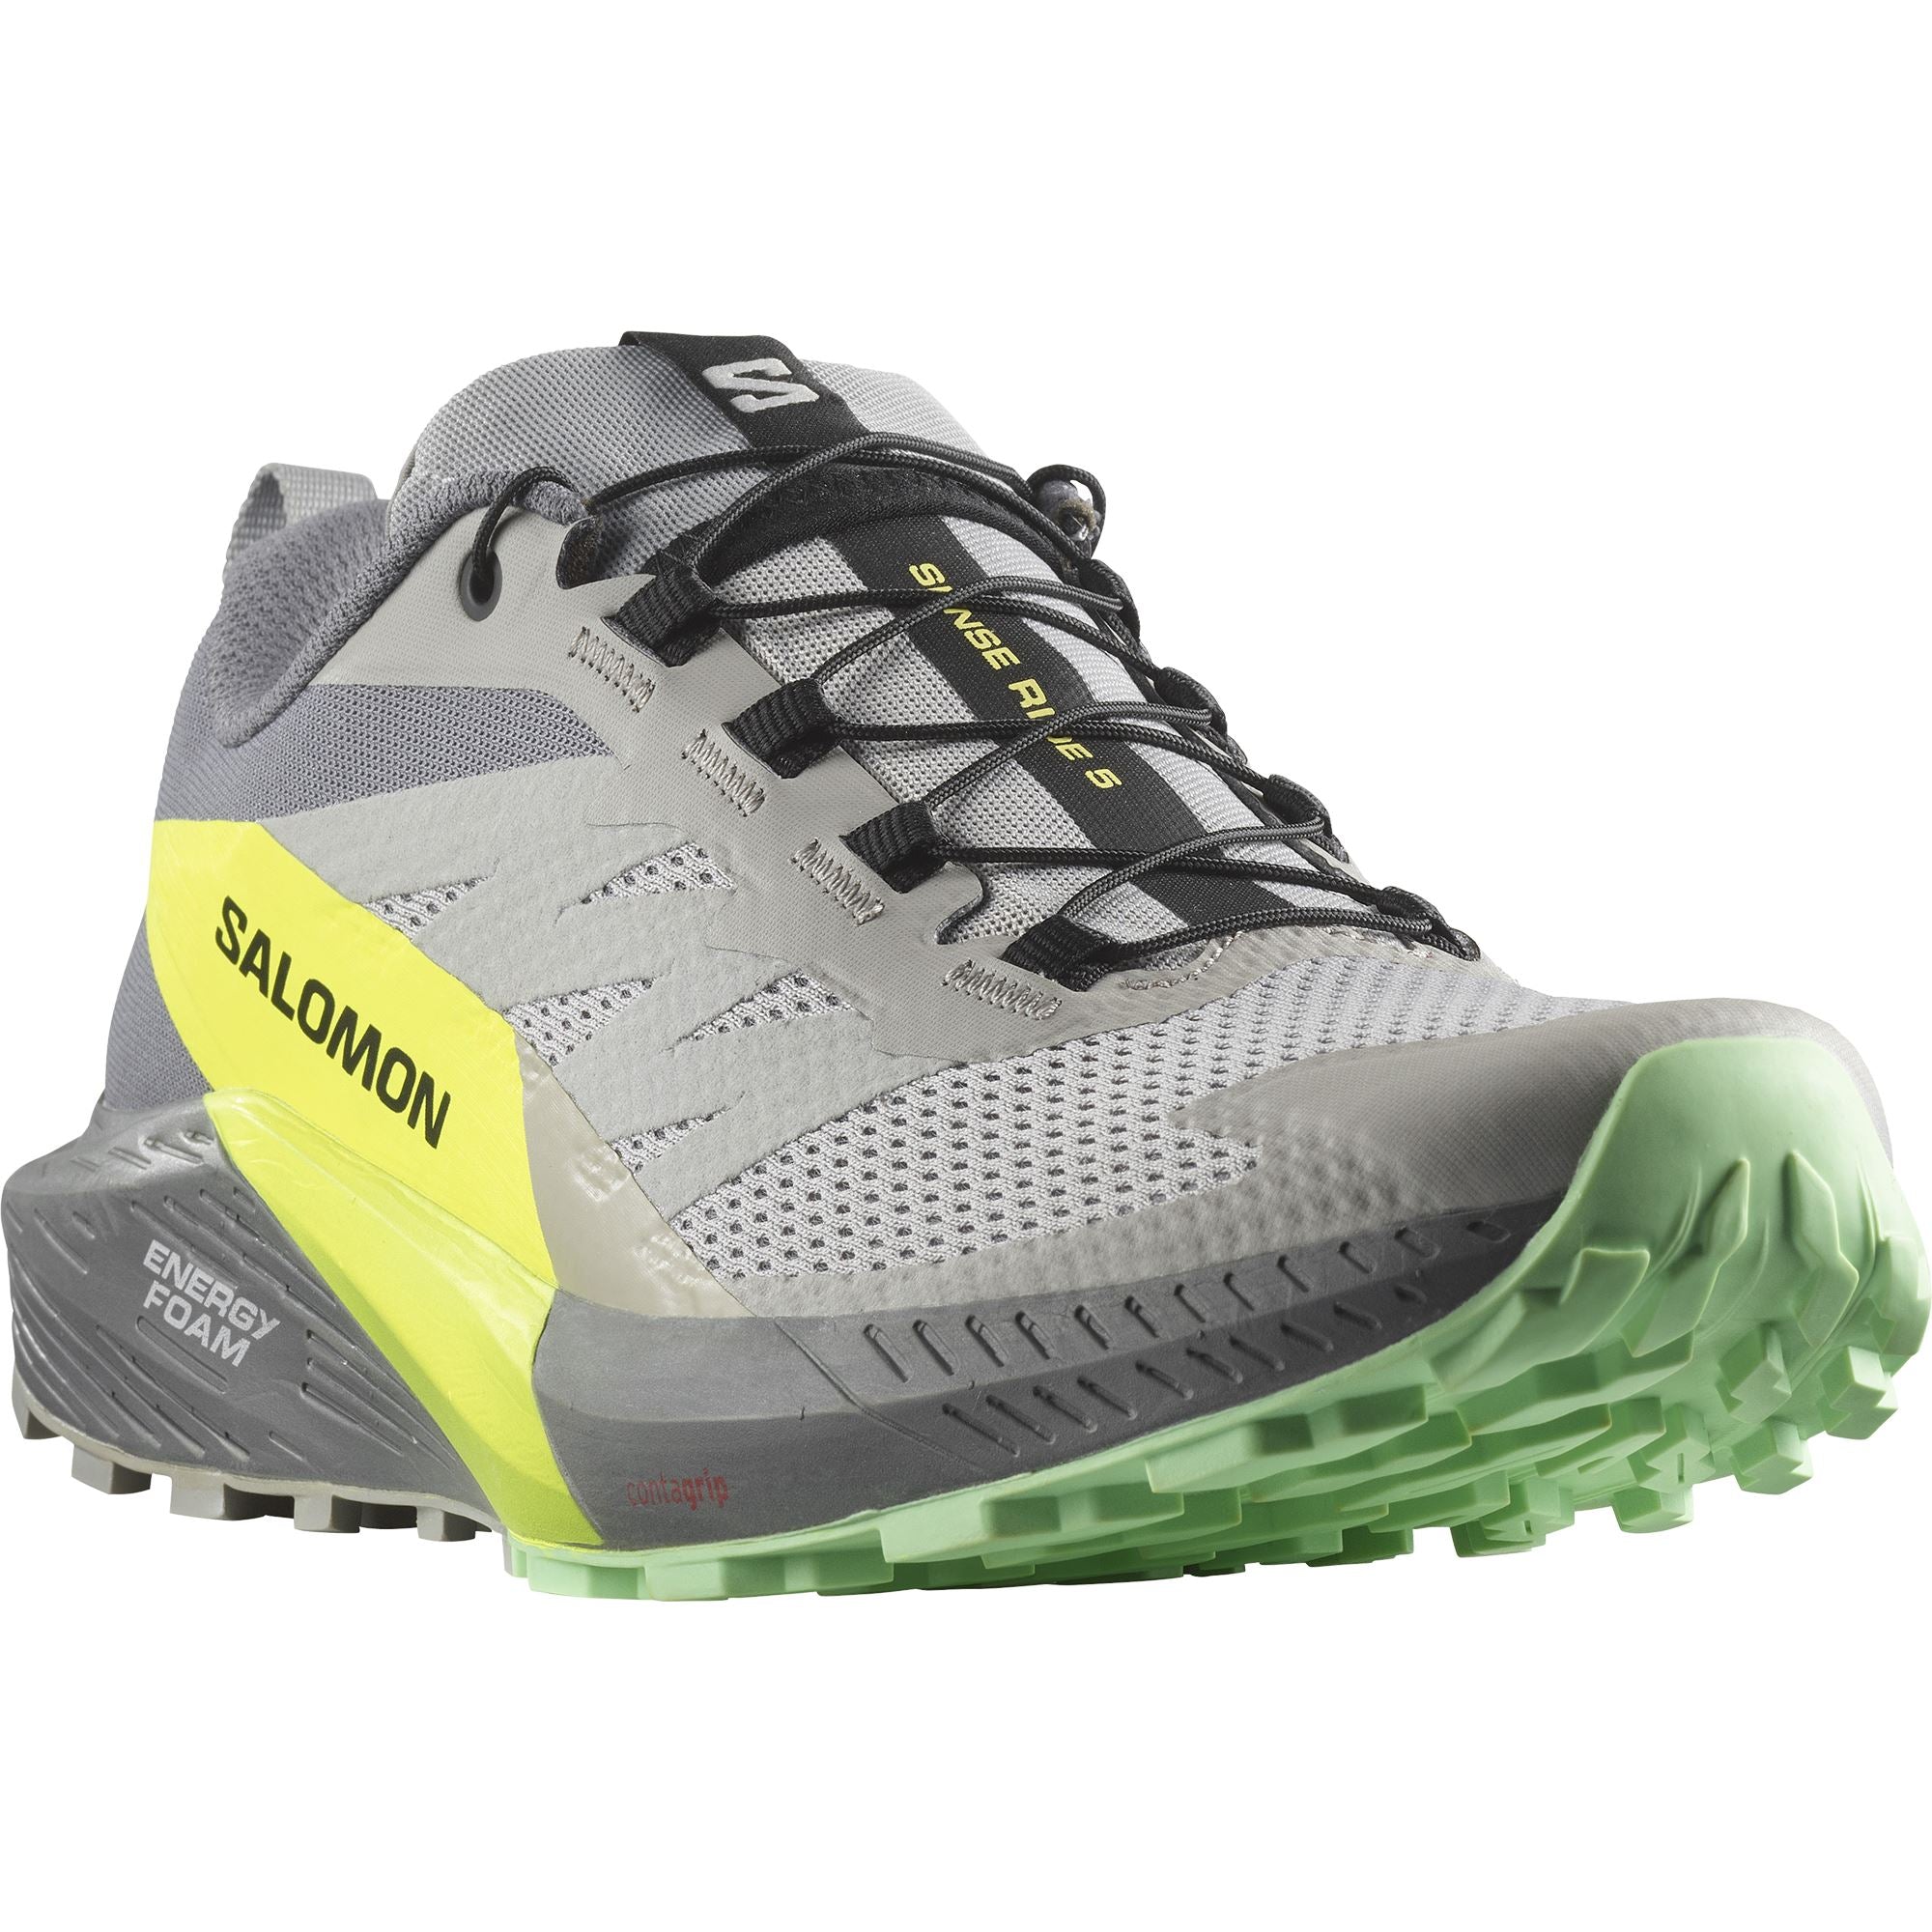 Salomon Sense Ride 5 Men's Trail Running Shoes Alloy / Quiet Shade / Safety Yellow US 9 